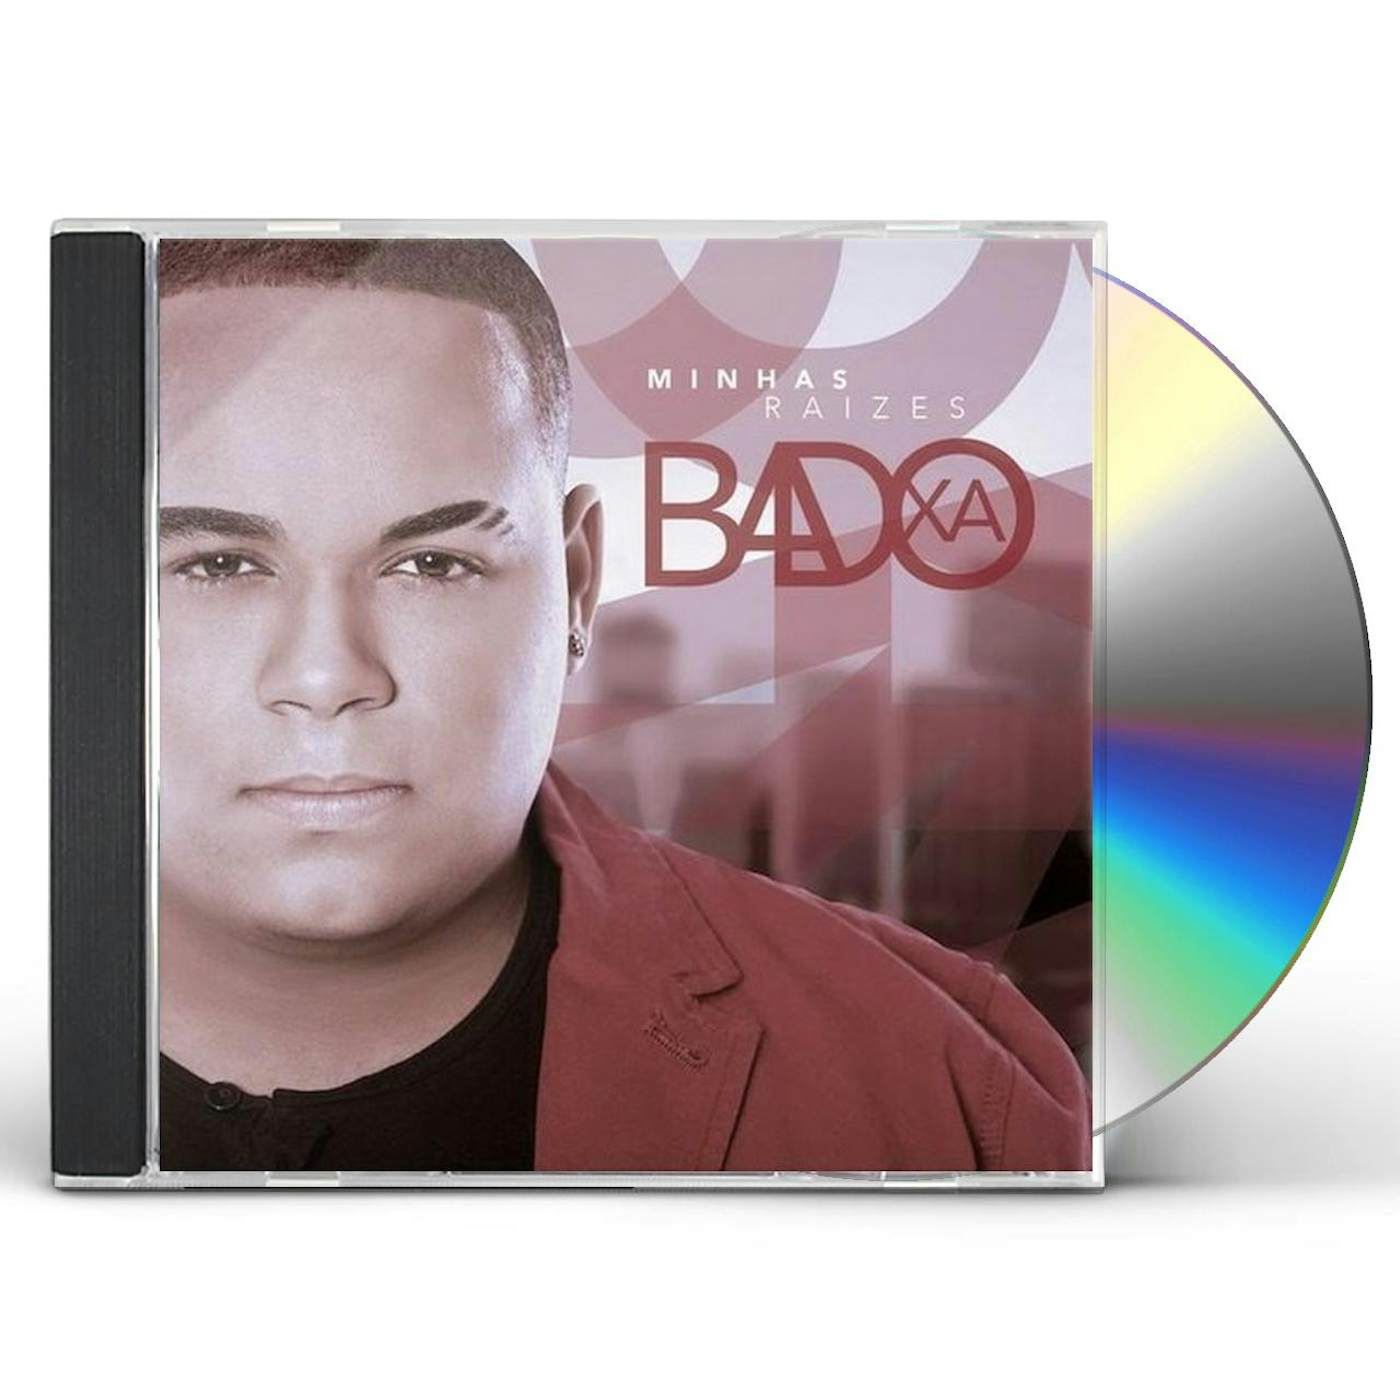 Badoxa MINHAS RAIZES CD